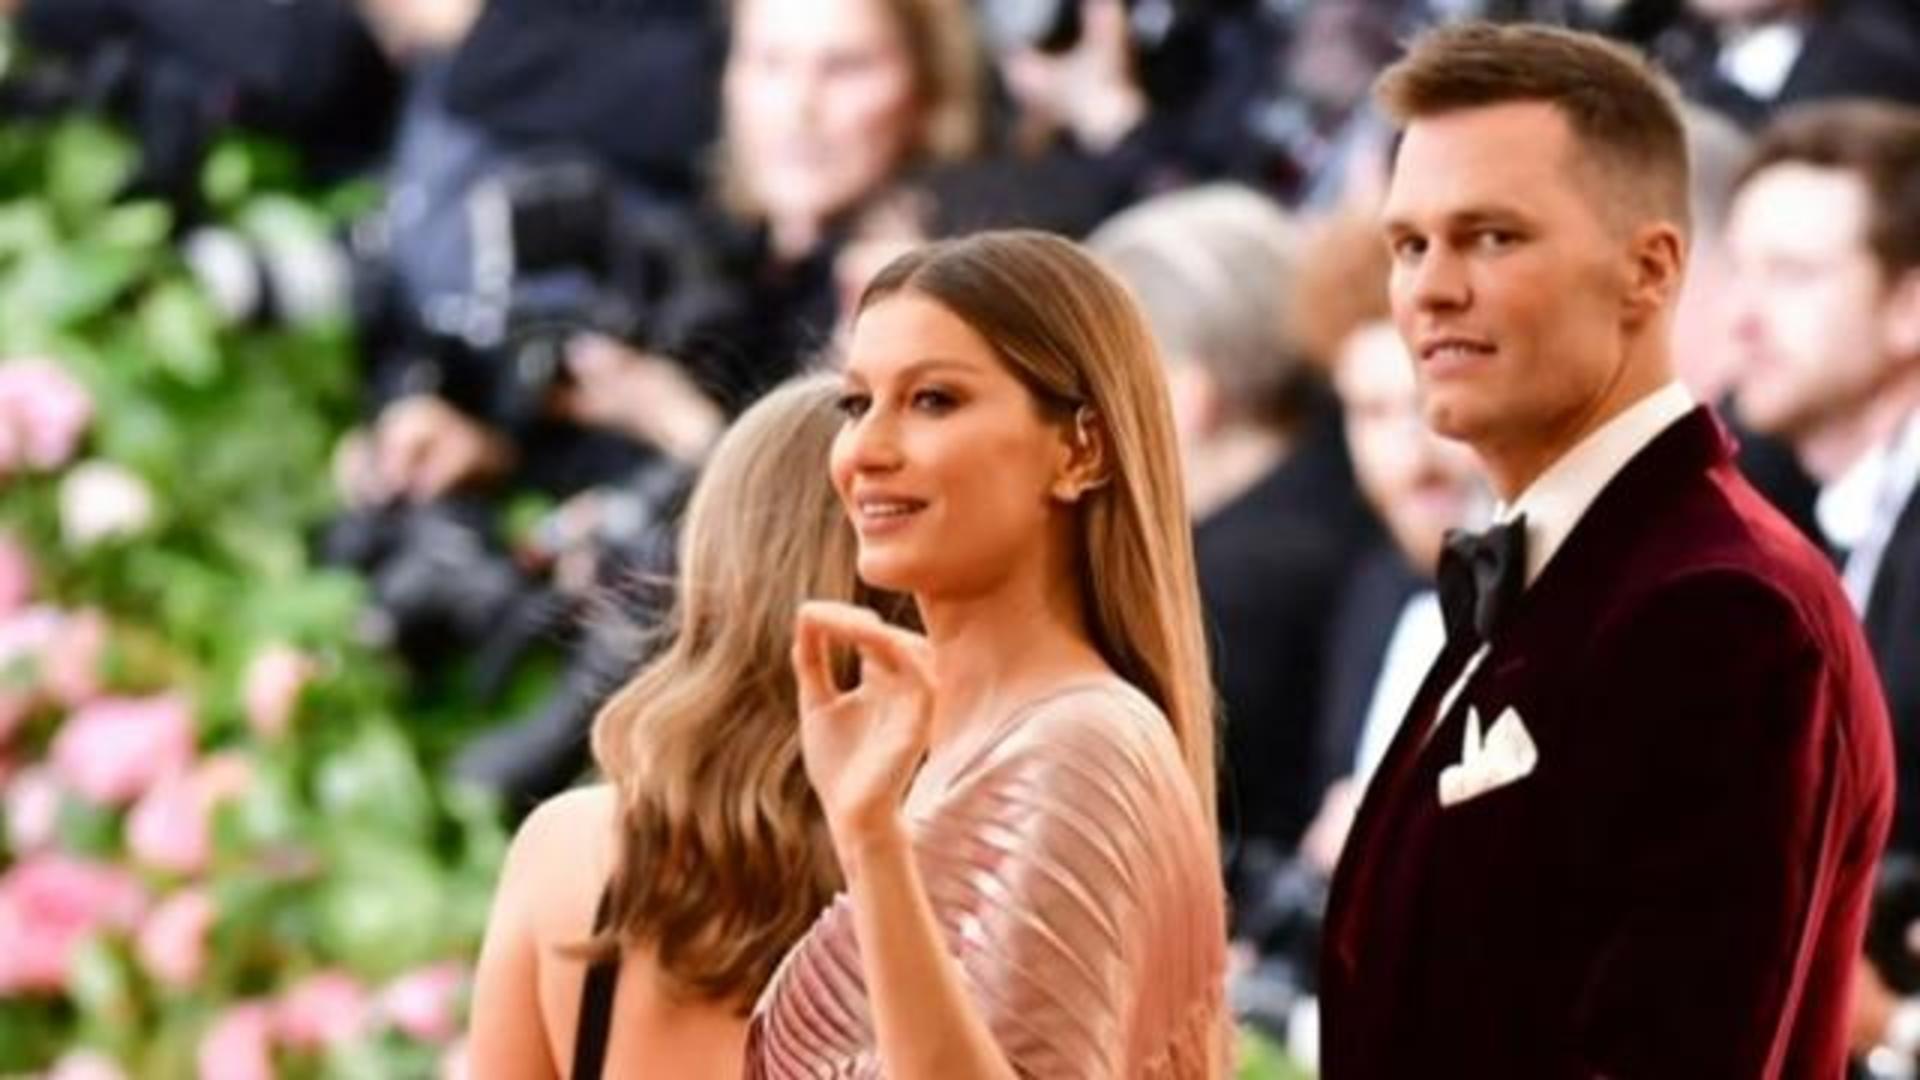 Gisele Bündchen spotted in Miami amid Tom Brady marital woes